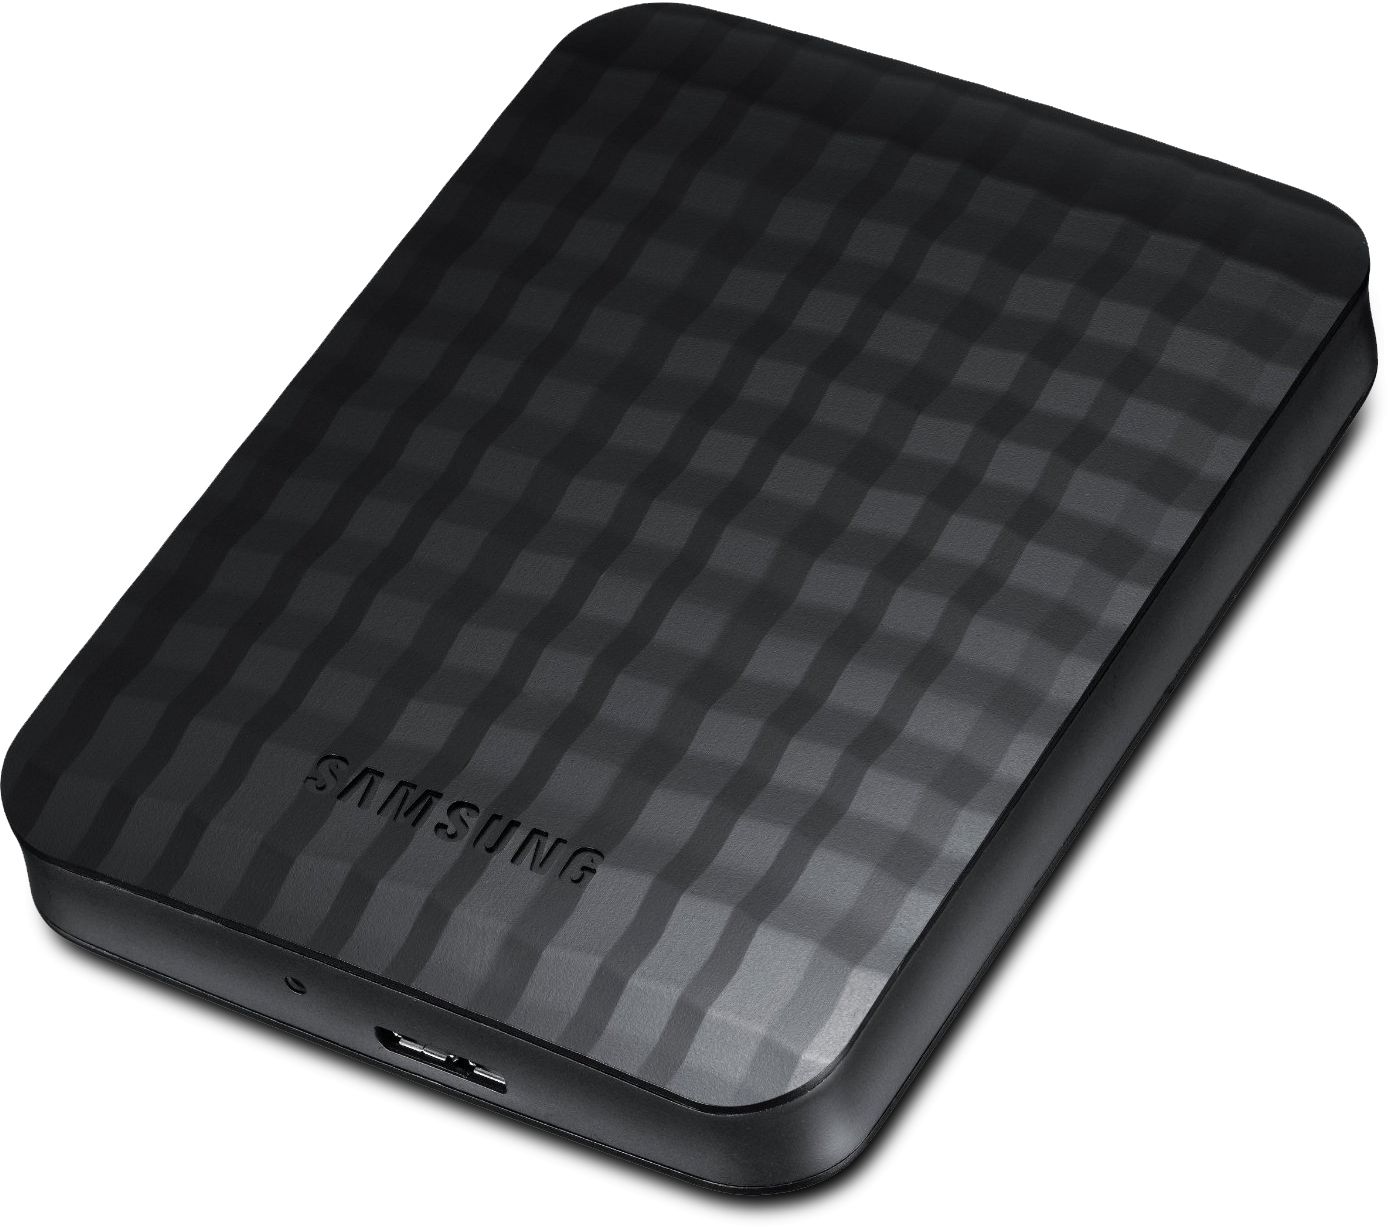 Samsung M3 Portable External Hard Drives